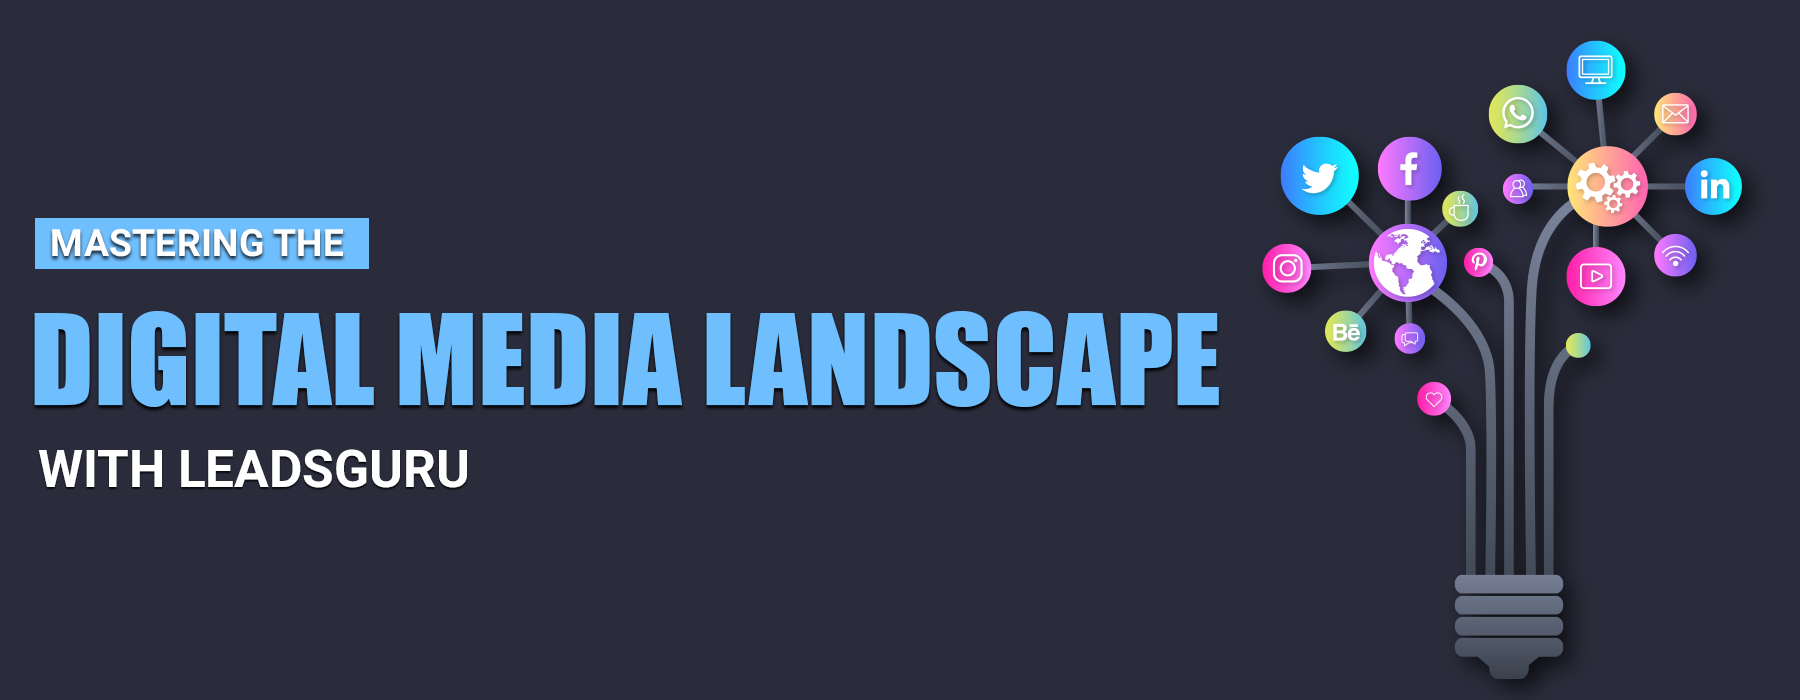 Mastering the Digital Media Landscape with LeadsGuru